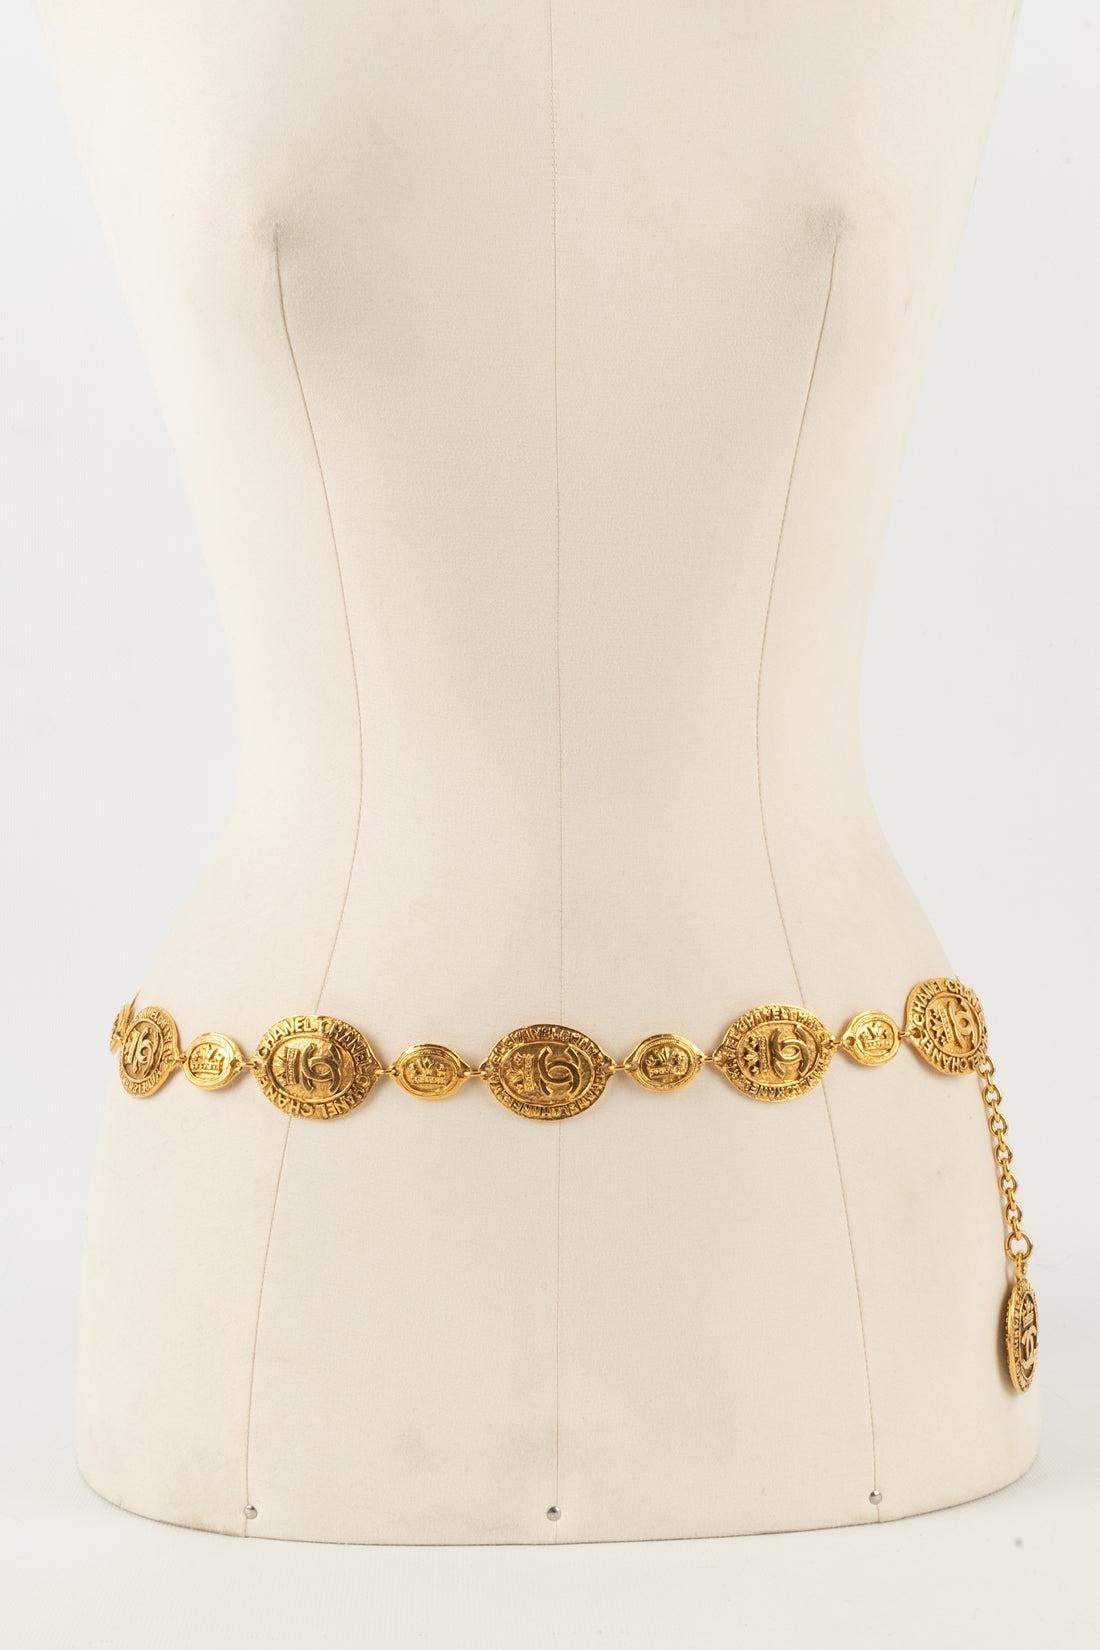 Women's Chanel Golden Metal Belt with Engraved Medallions, 1980s